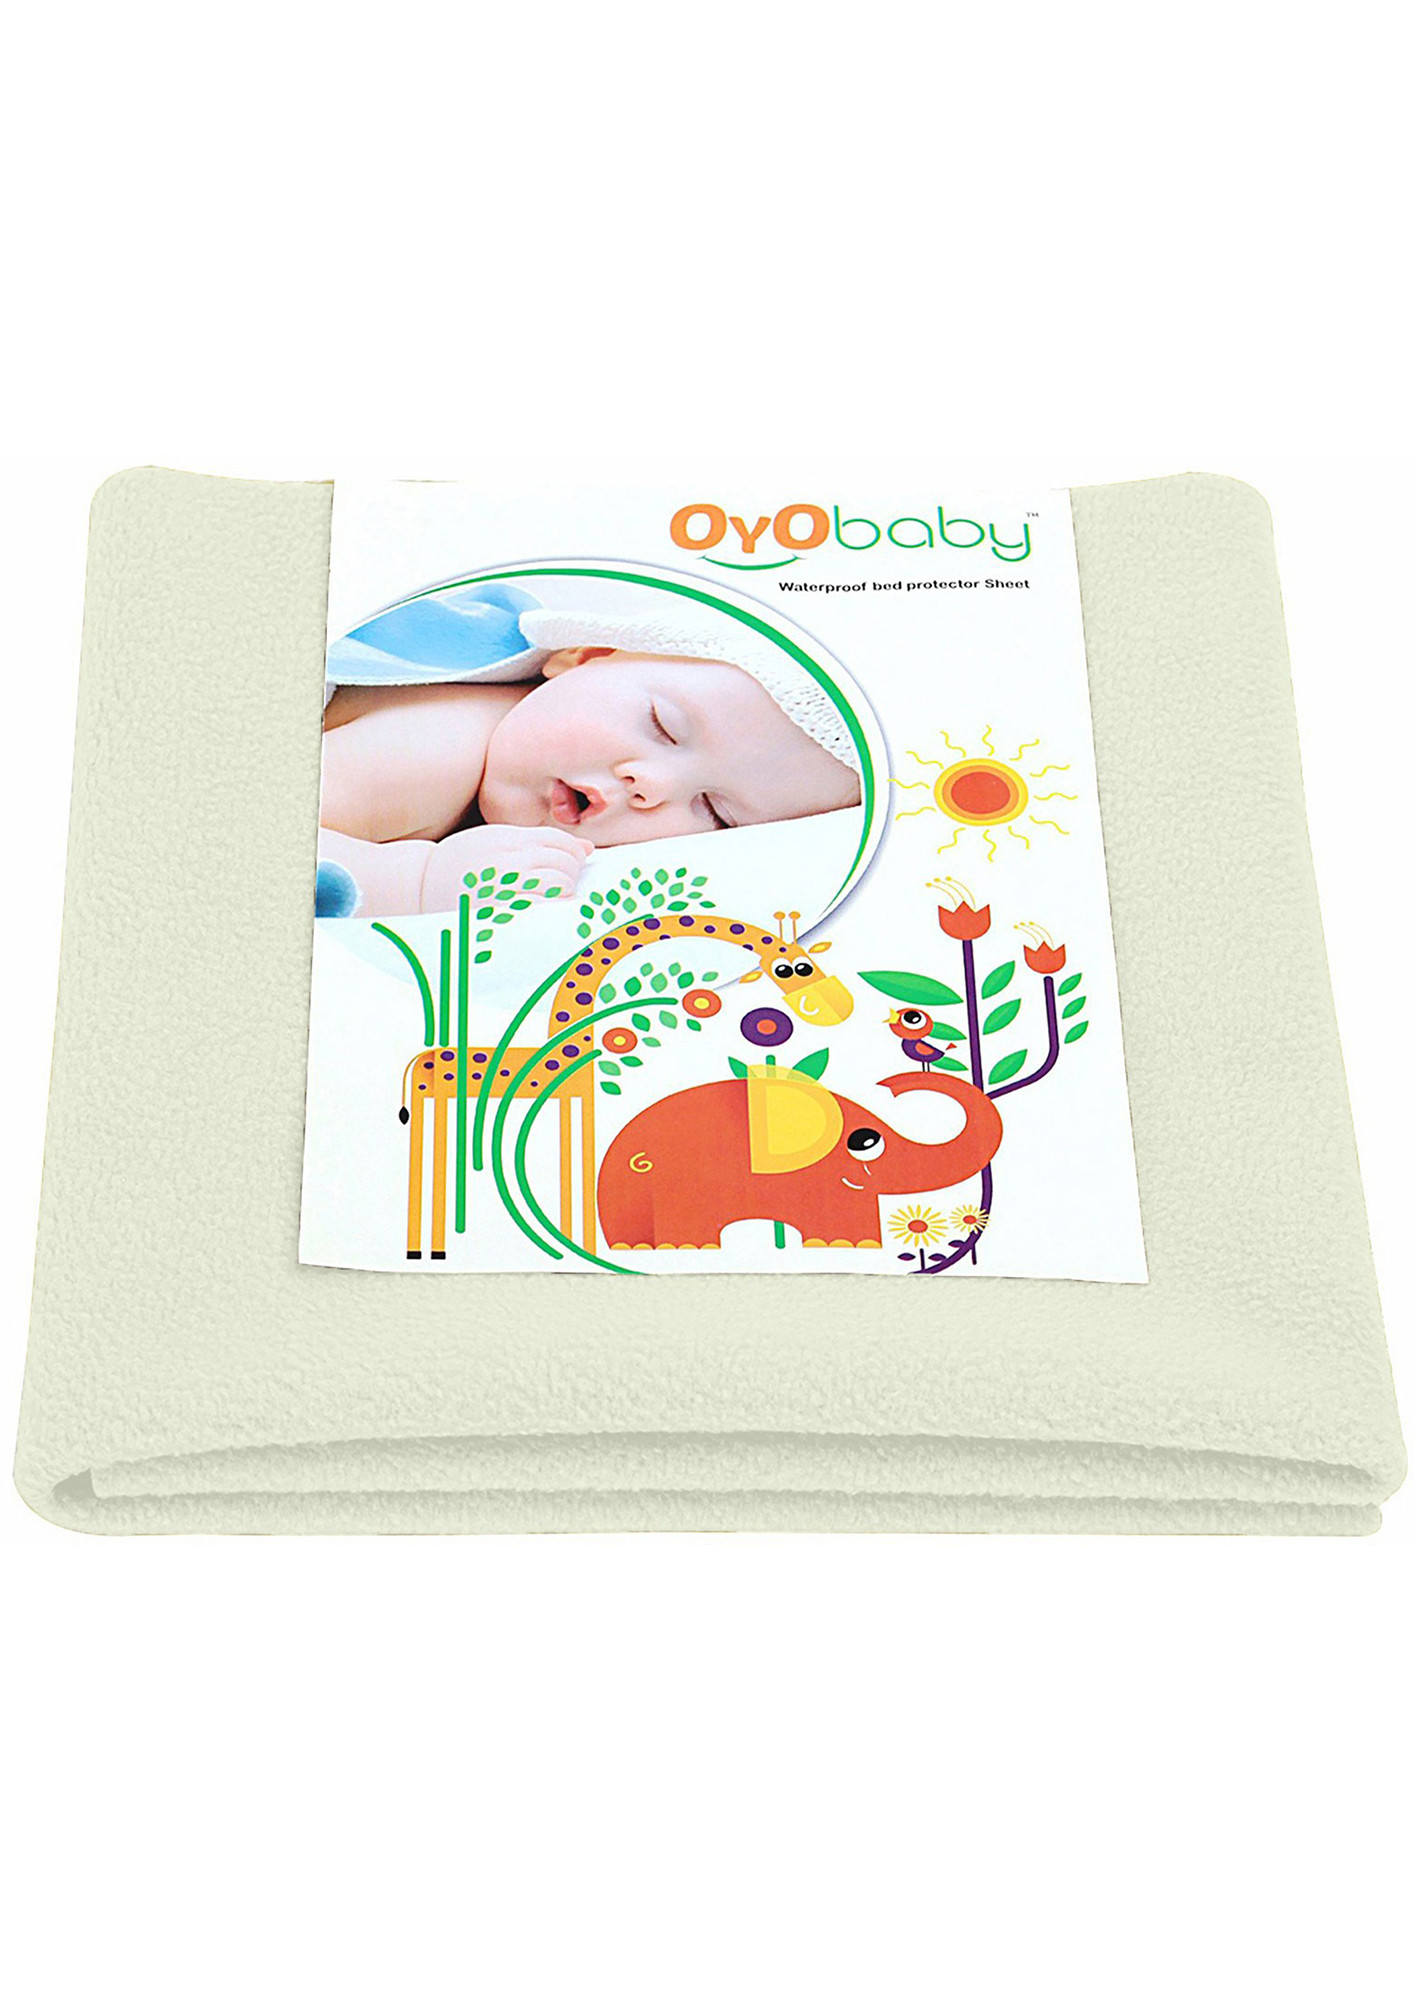 Oyo Baby Cotton Baby Bed Protecting Mat (Ivory, Medium)-OB-2021-IV